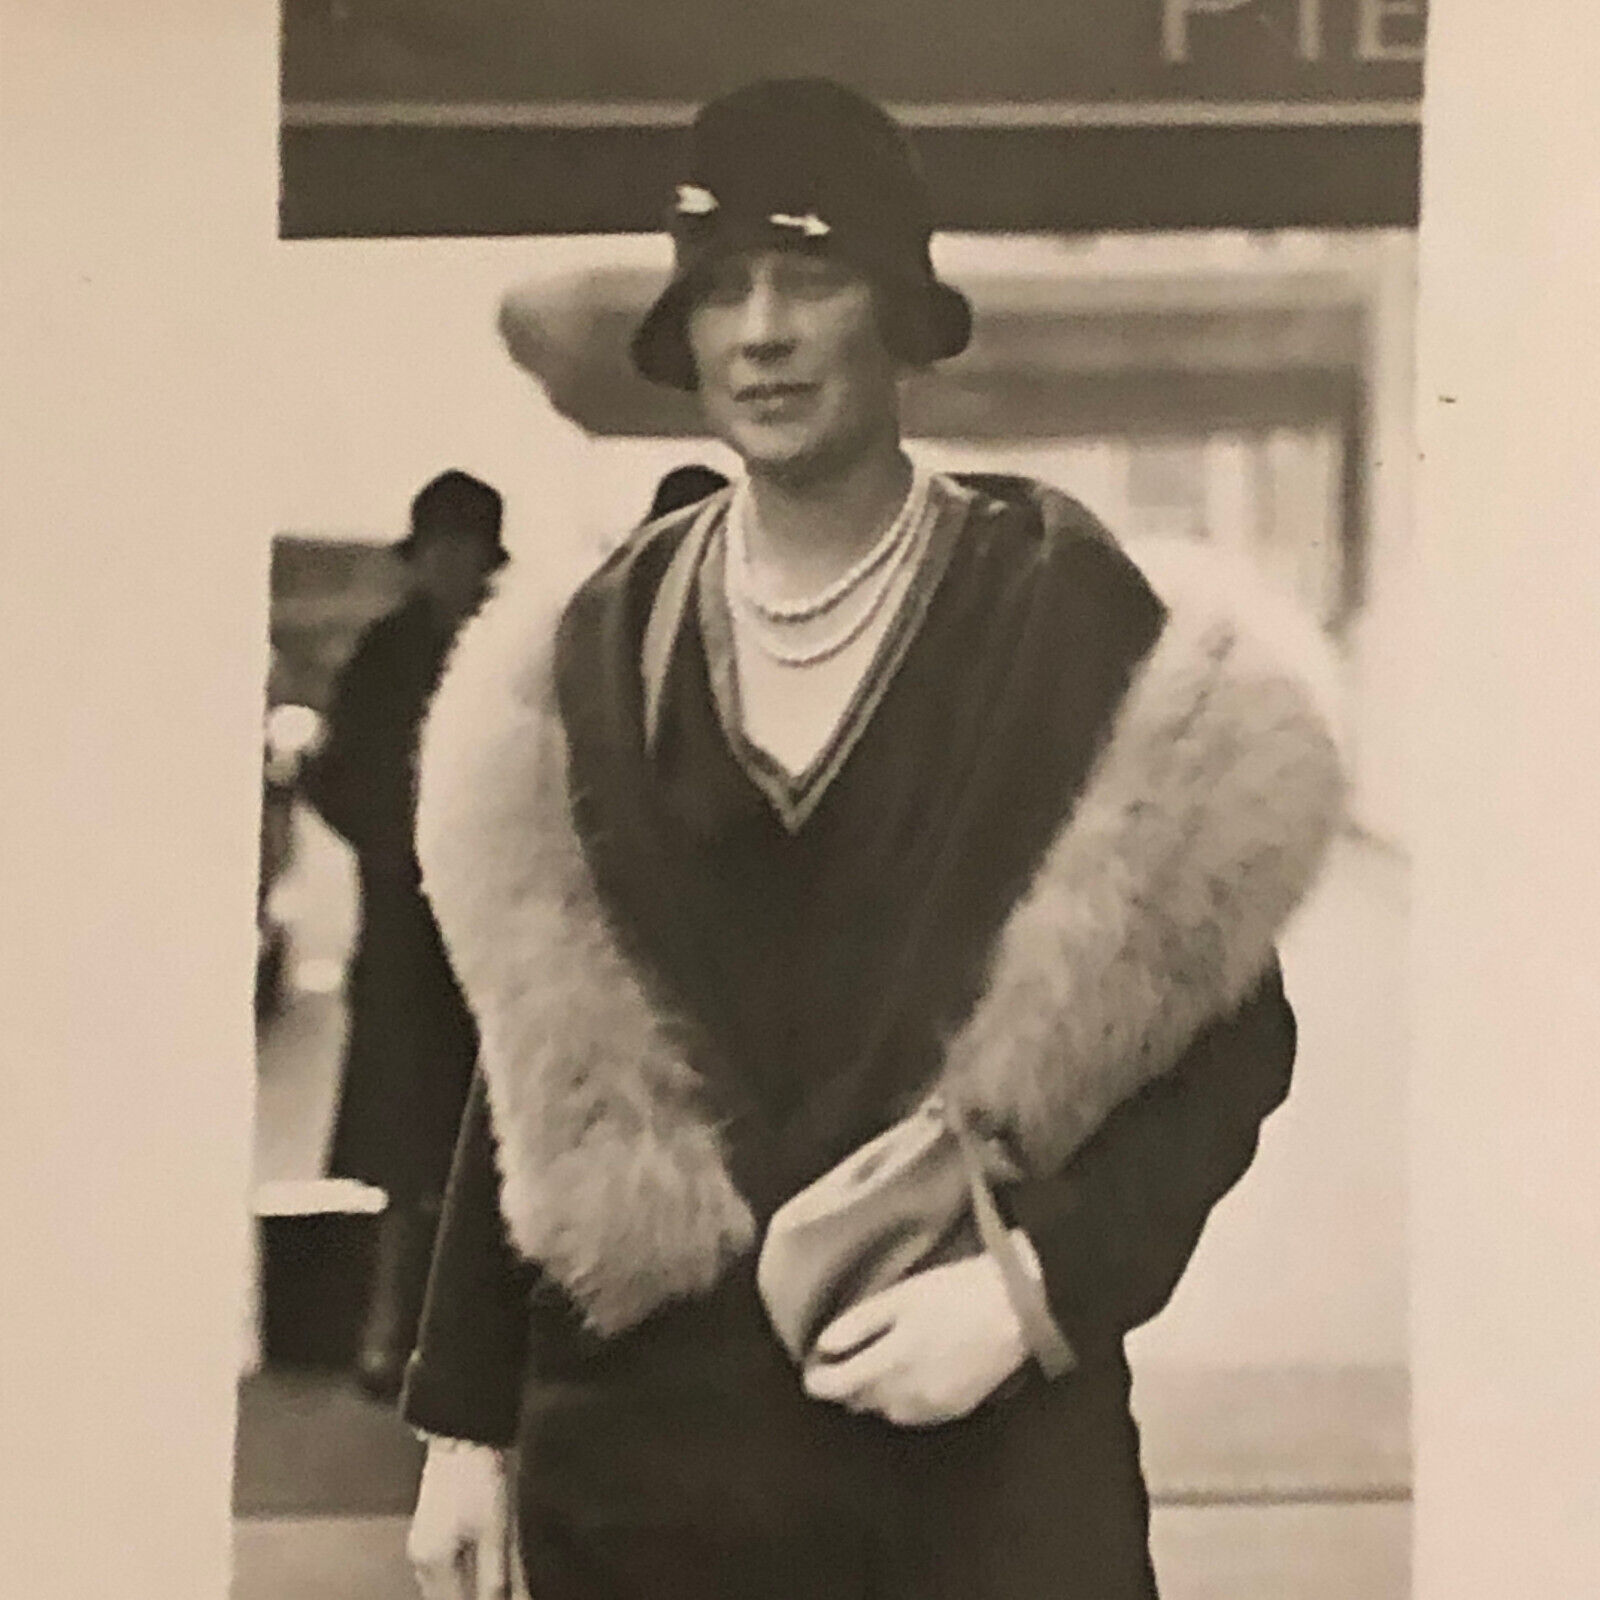 Press Photo Photograph New York Society Lady on Park Avenue 1927 Underwood Photo